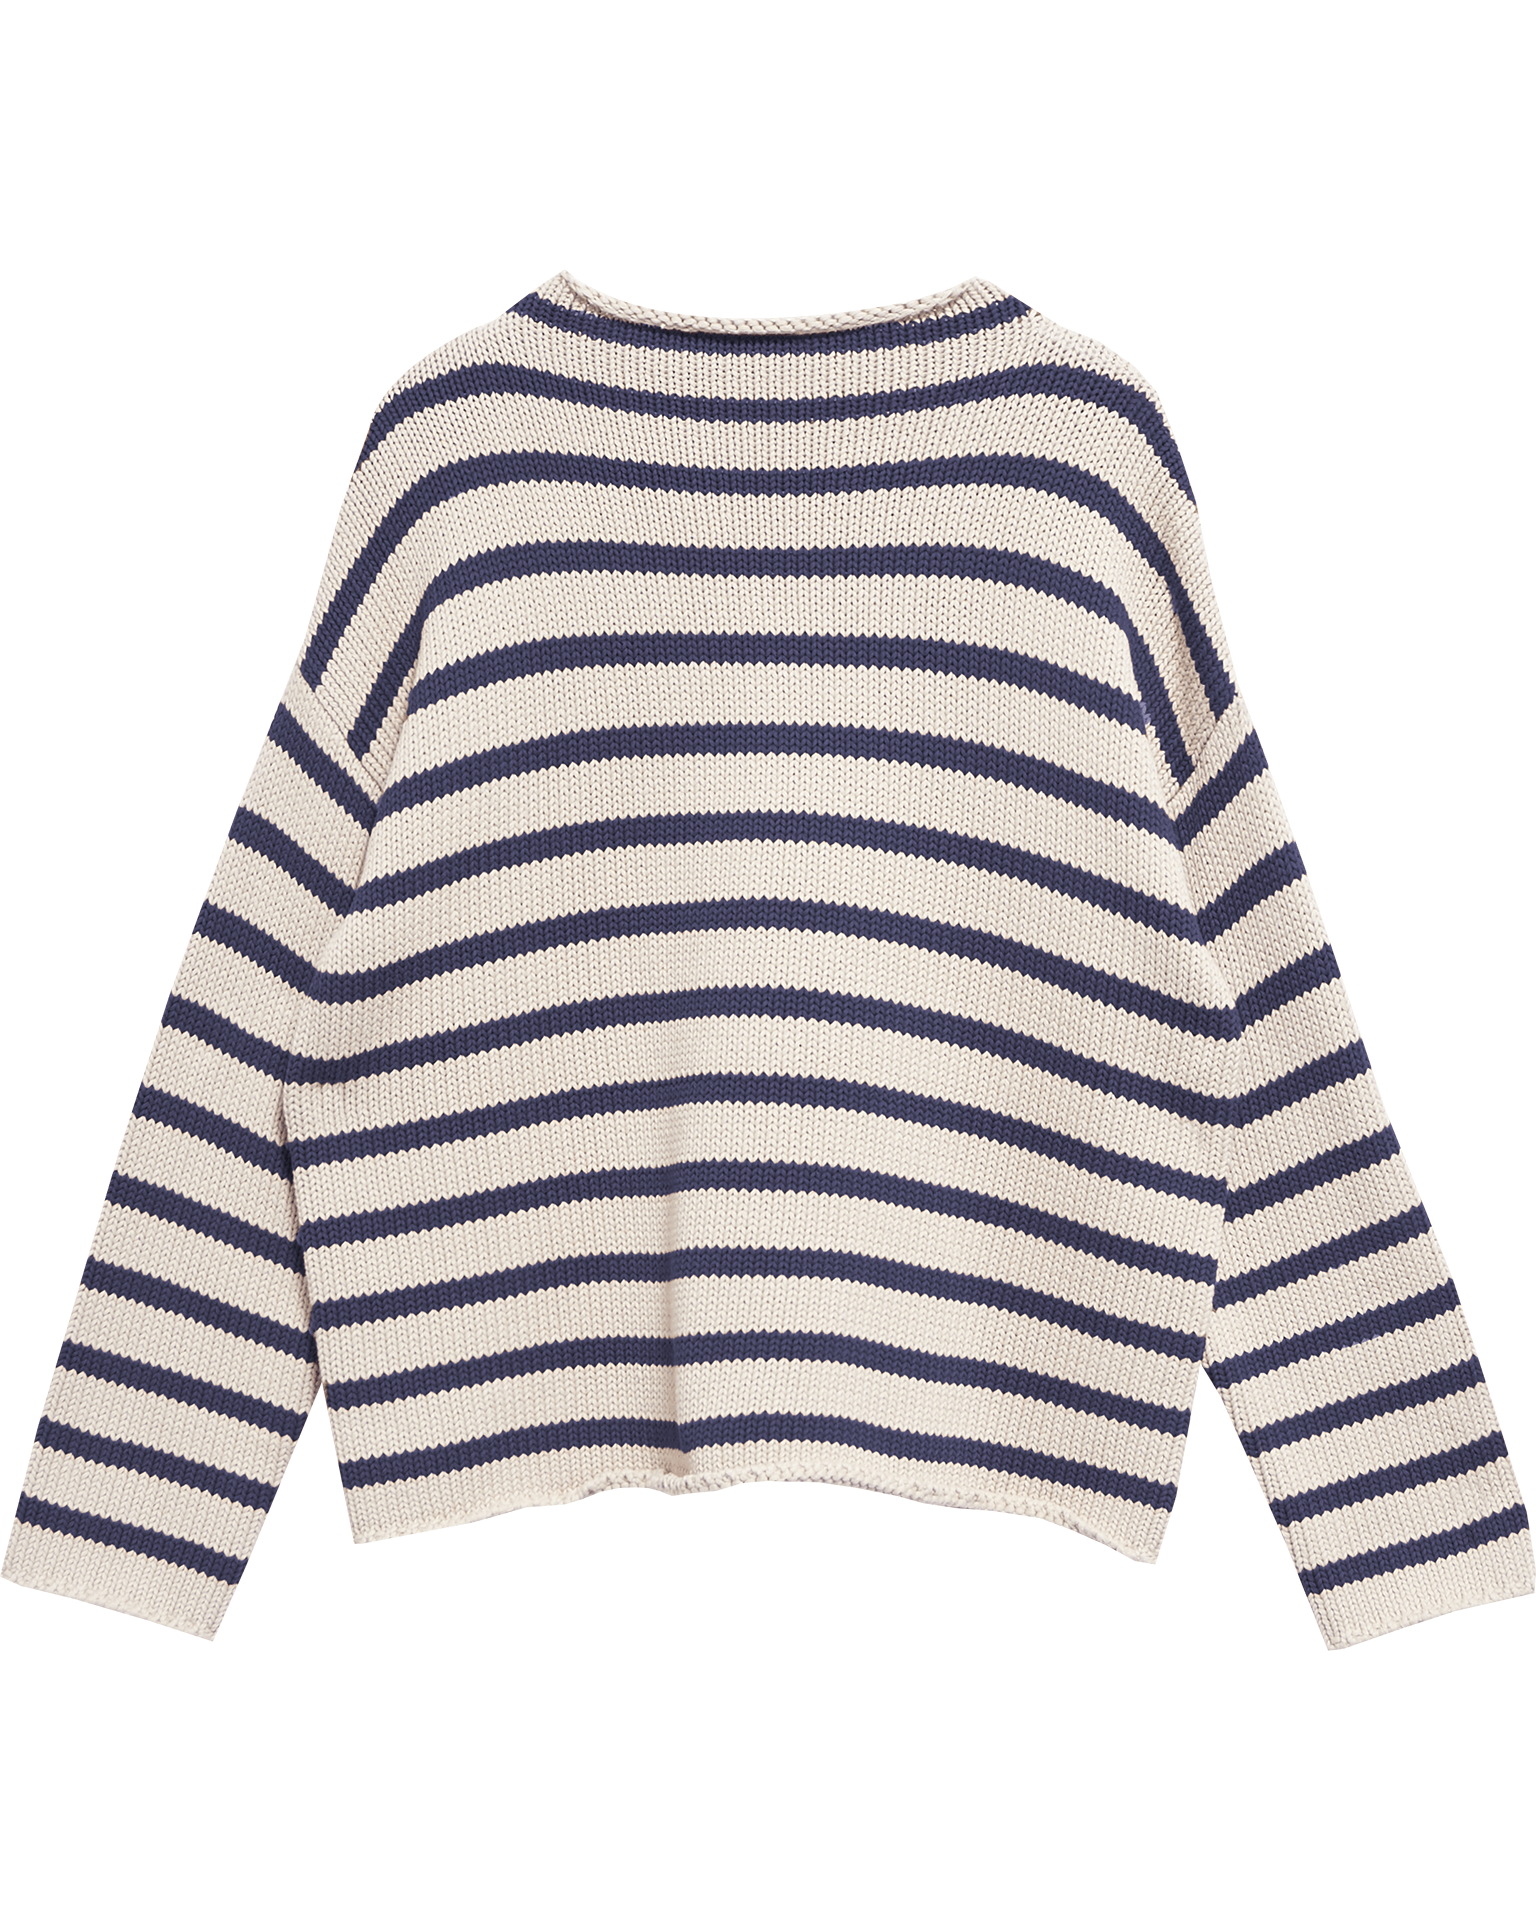 Lamis Stripe Sweater in Natural/Navy